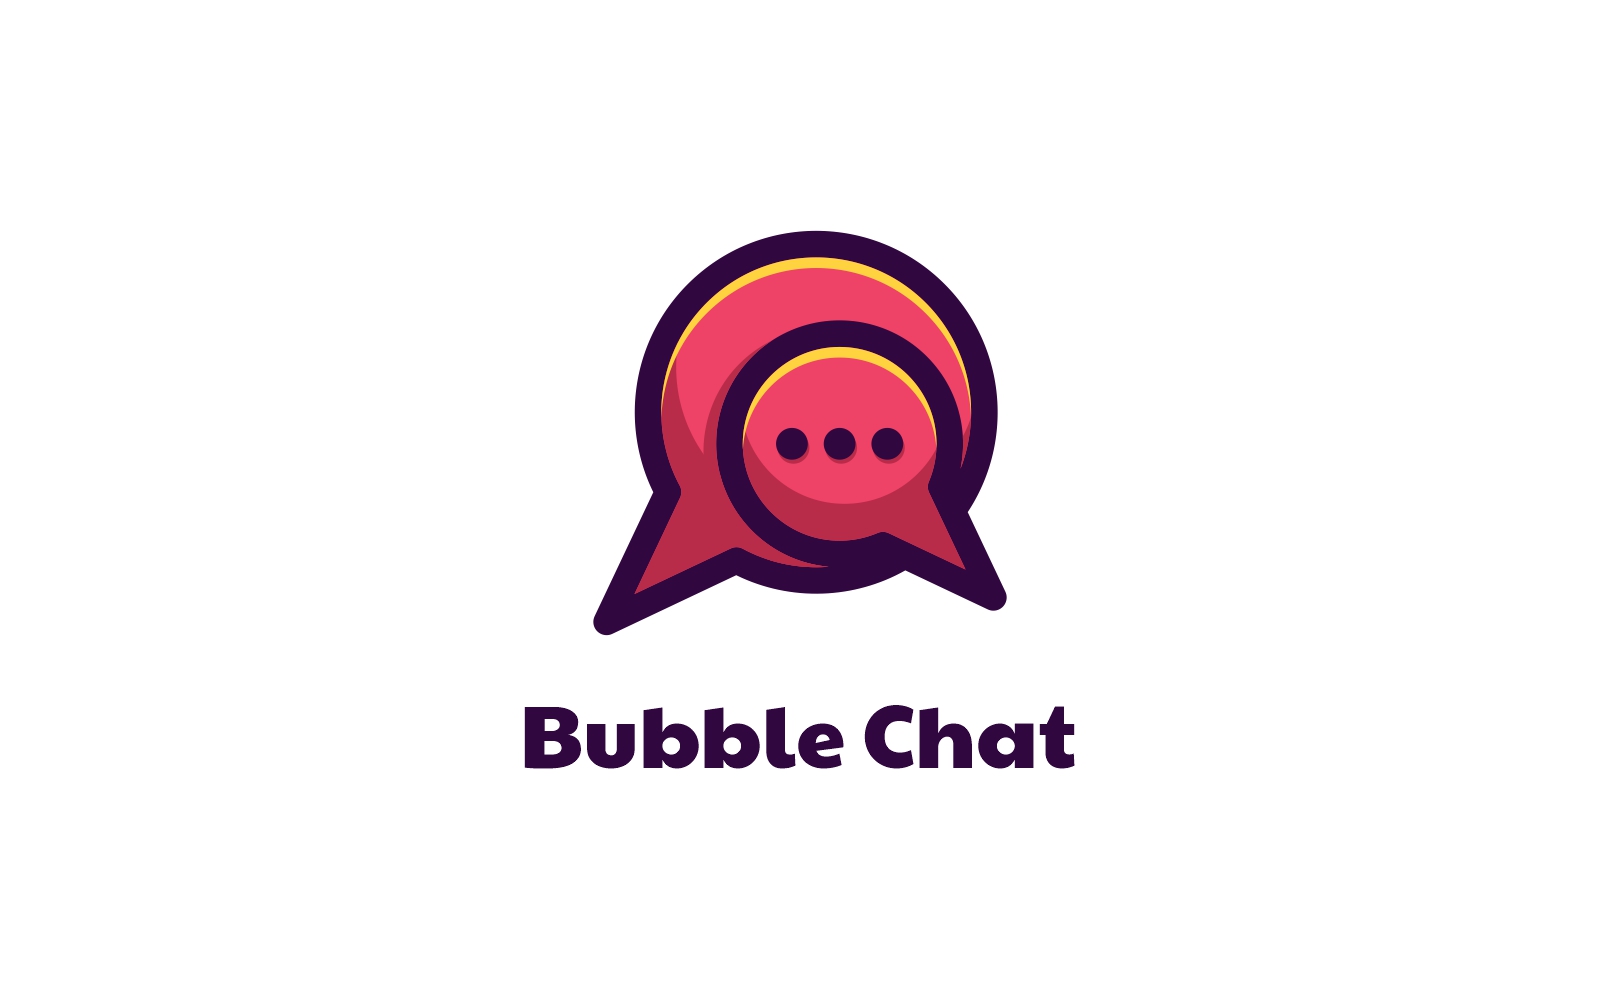 Bubble Chat Simple Mascot Logo